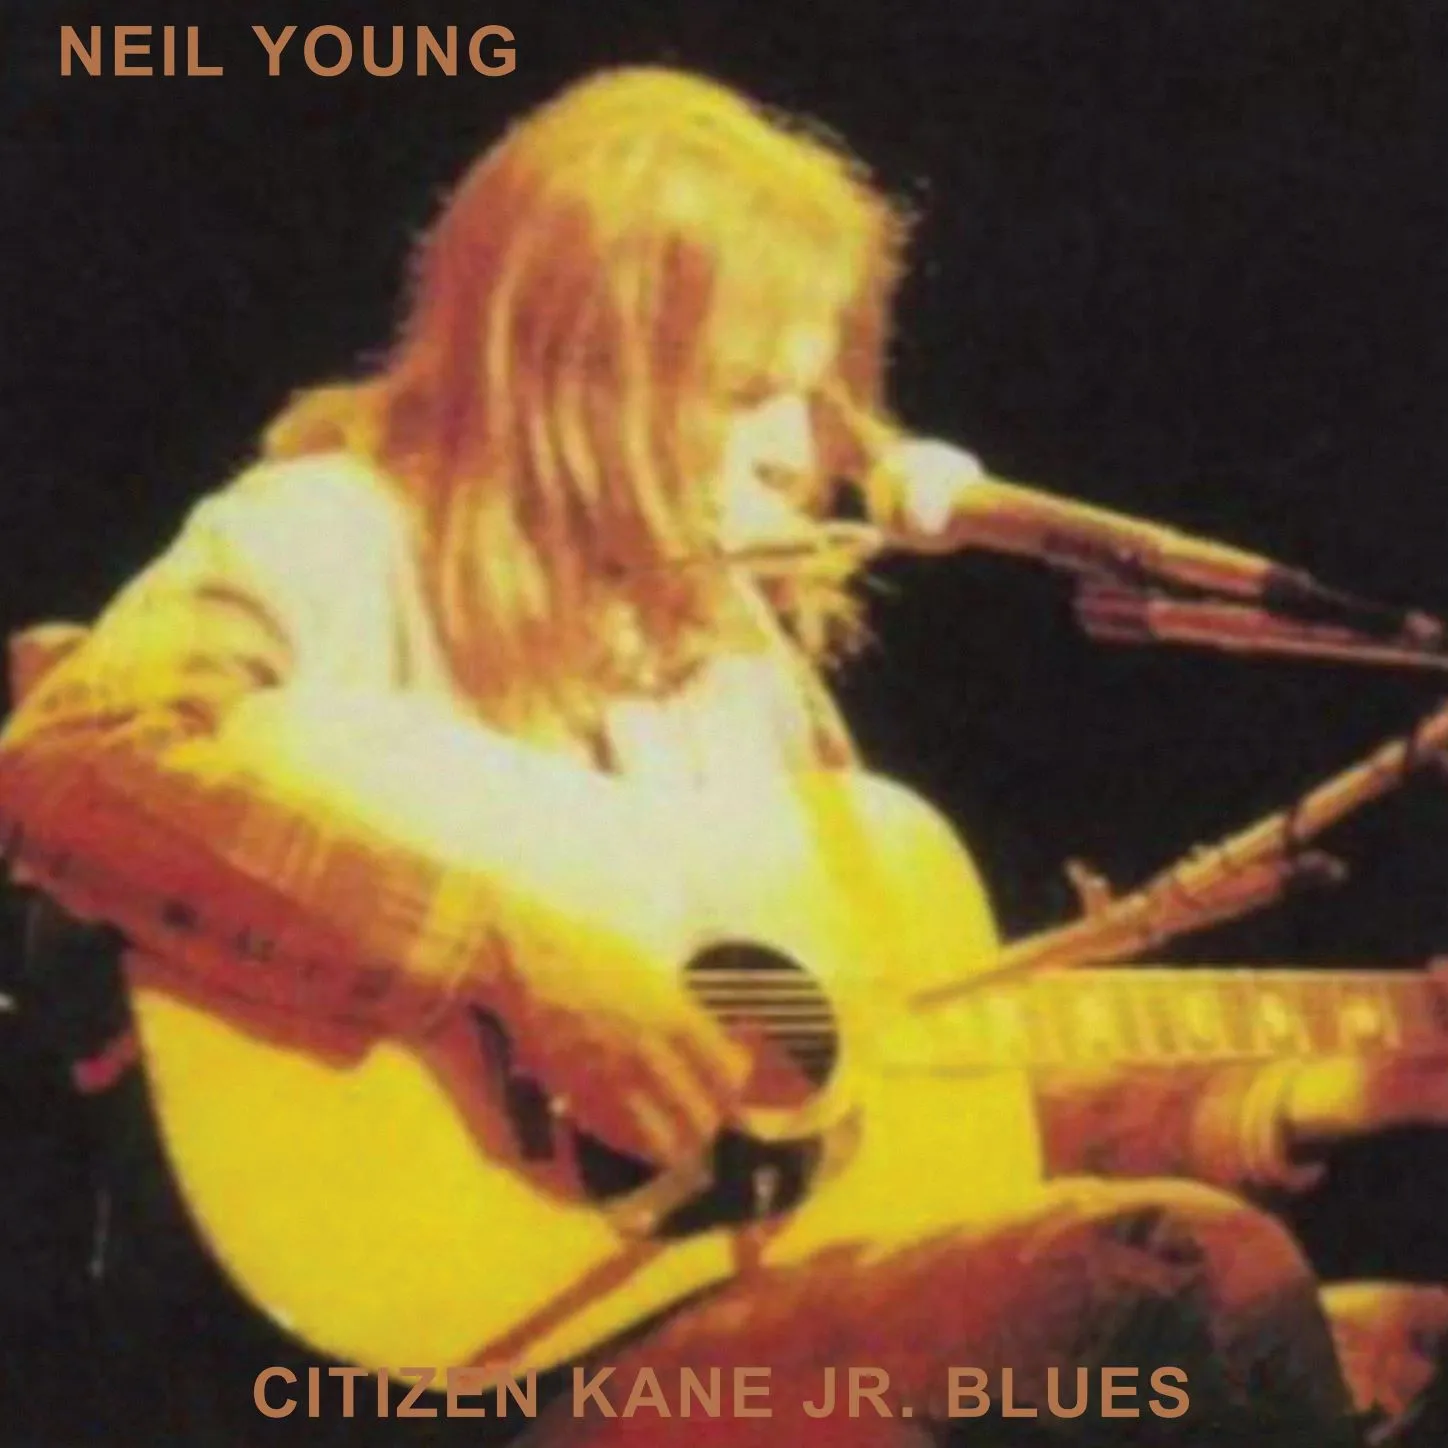 Neil Young - Citizen Kane Jr. Blues (Live at The Bottom Line) artwork